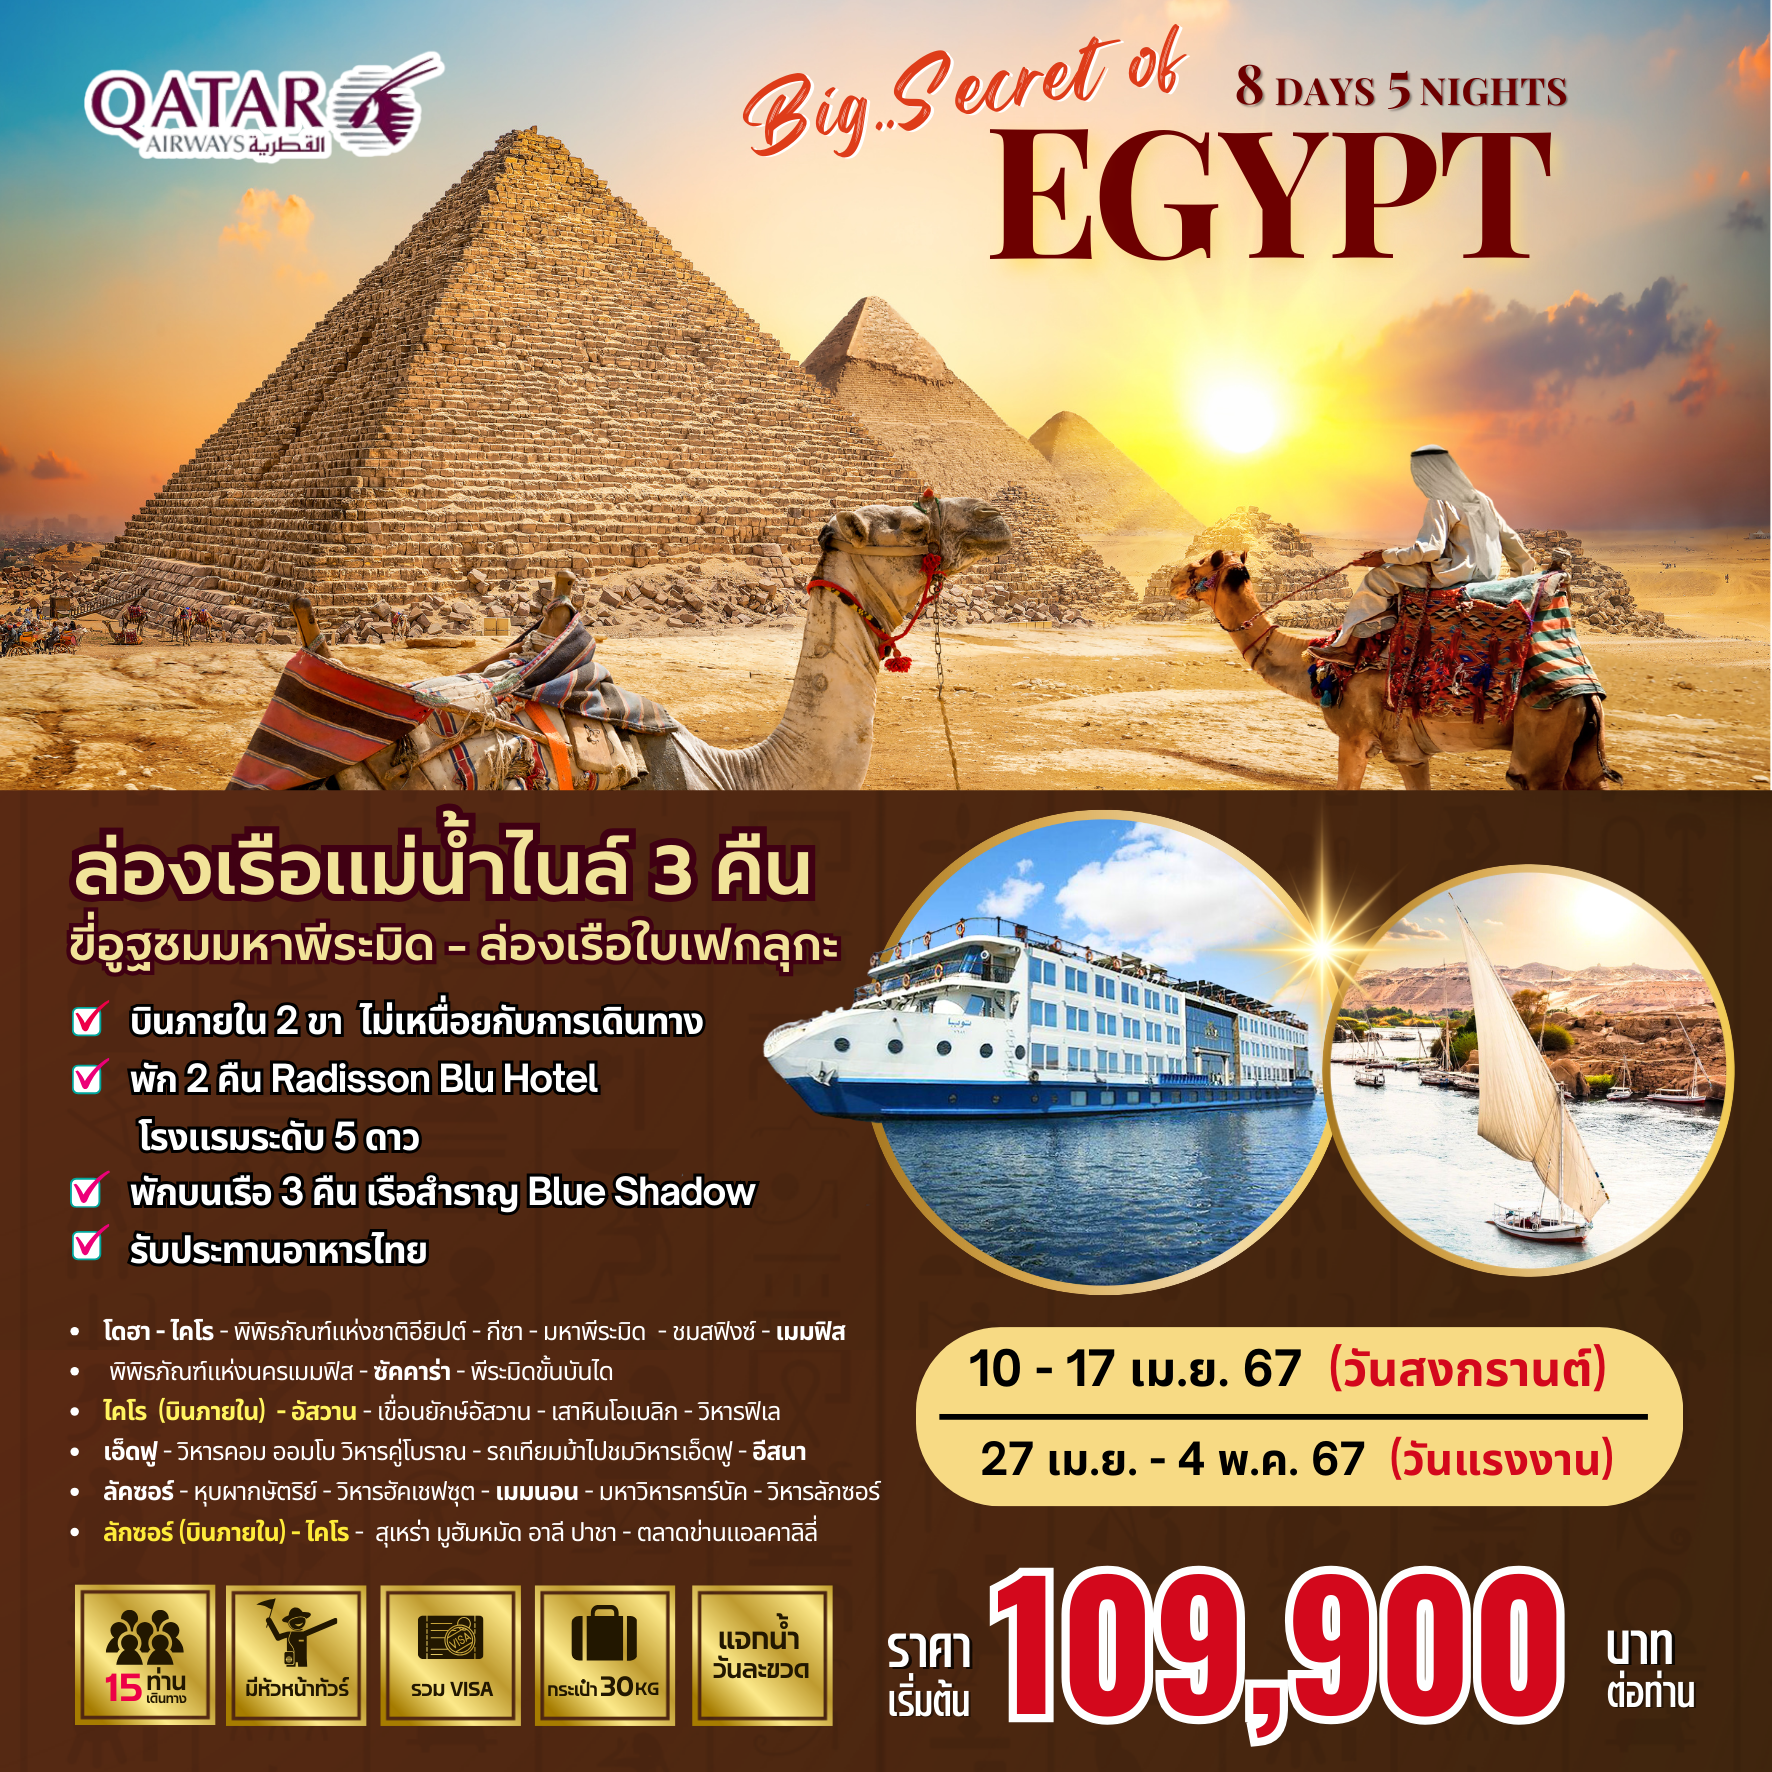 Secret of EGYPT 8 วัน 5 คืน by QATAR AIRWAYS